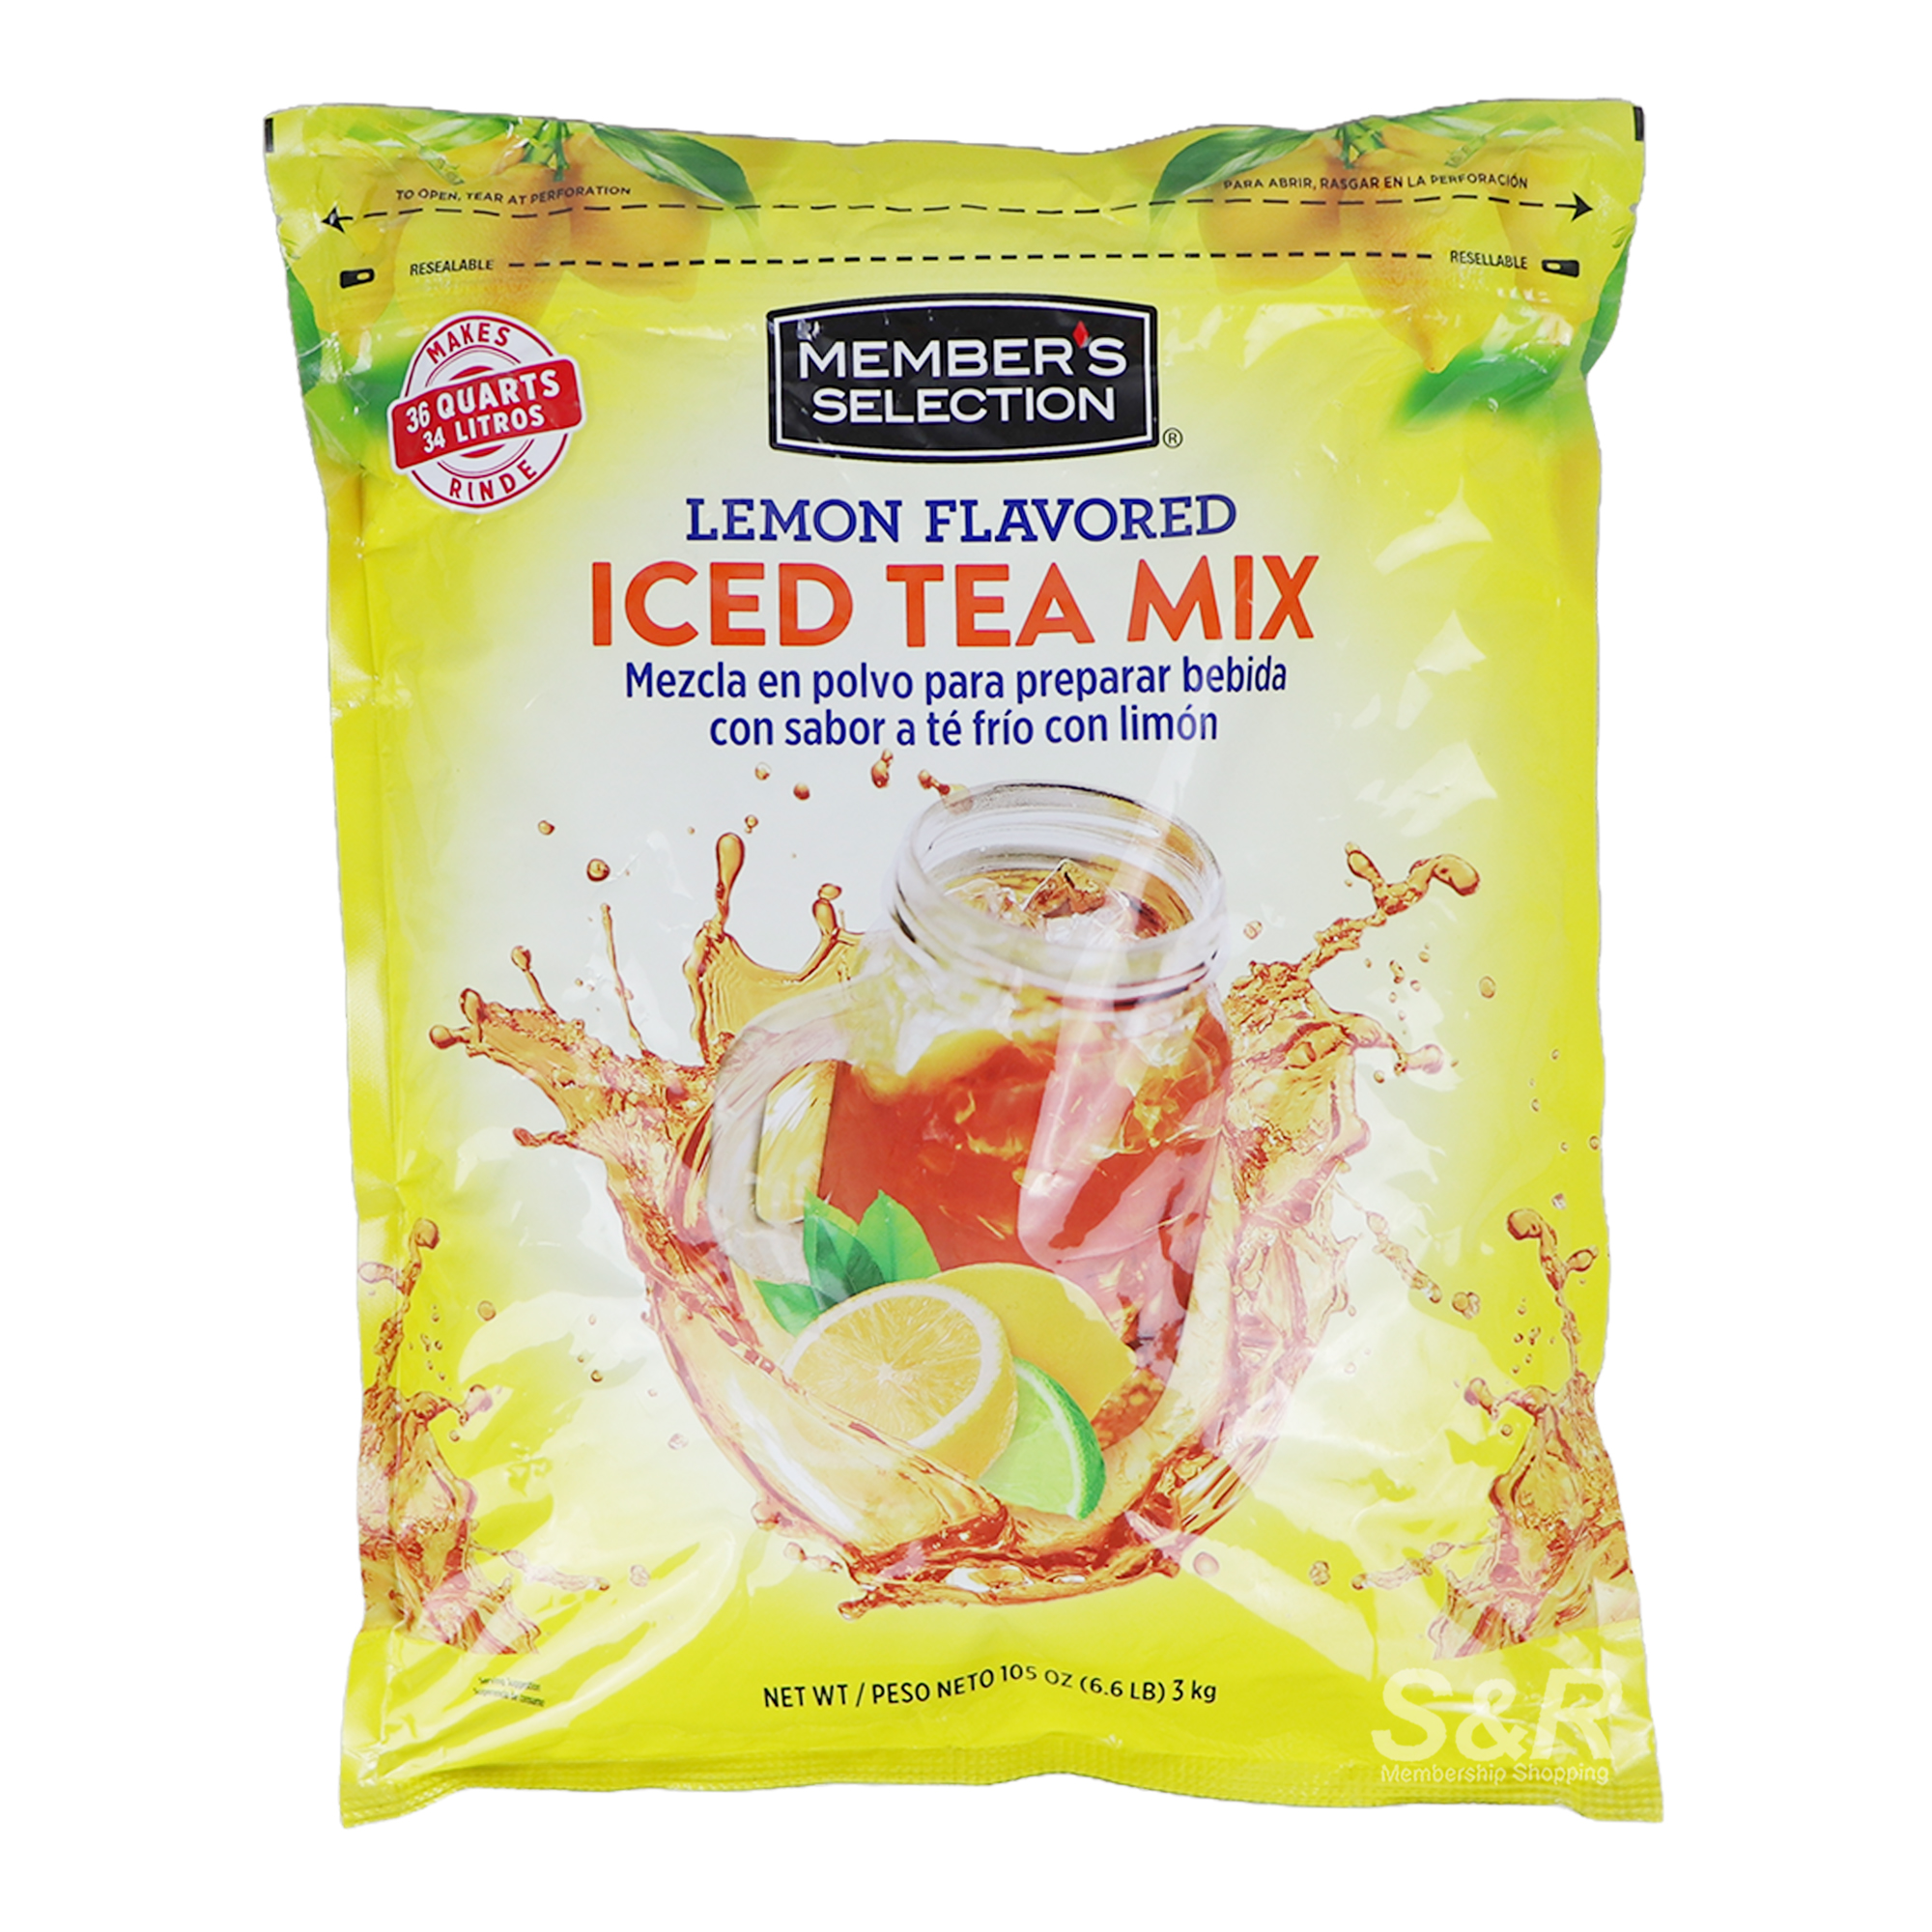 Member's Selection Lemon Flavored Iced Tea Mix 3kg